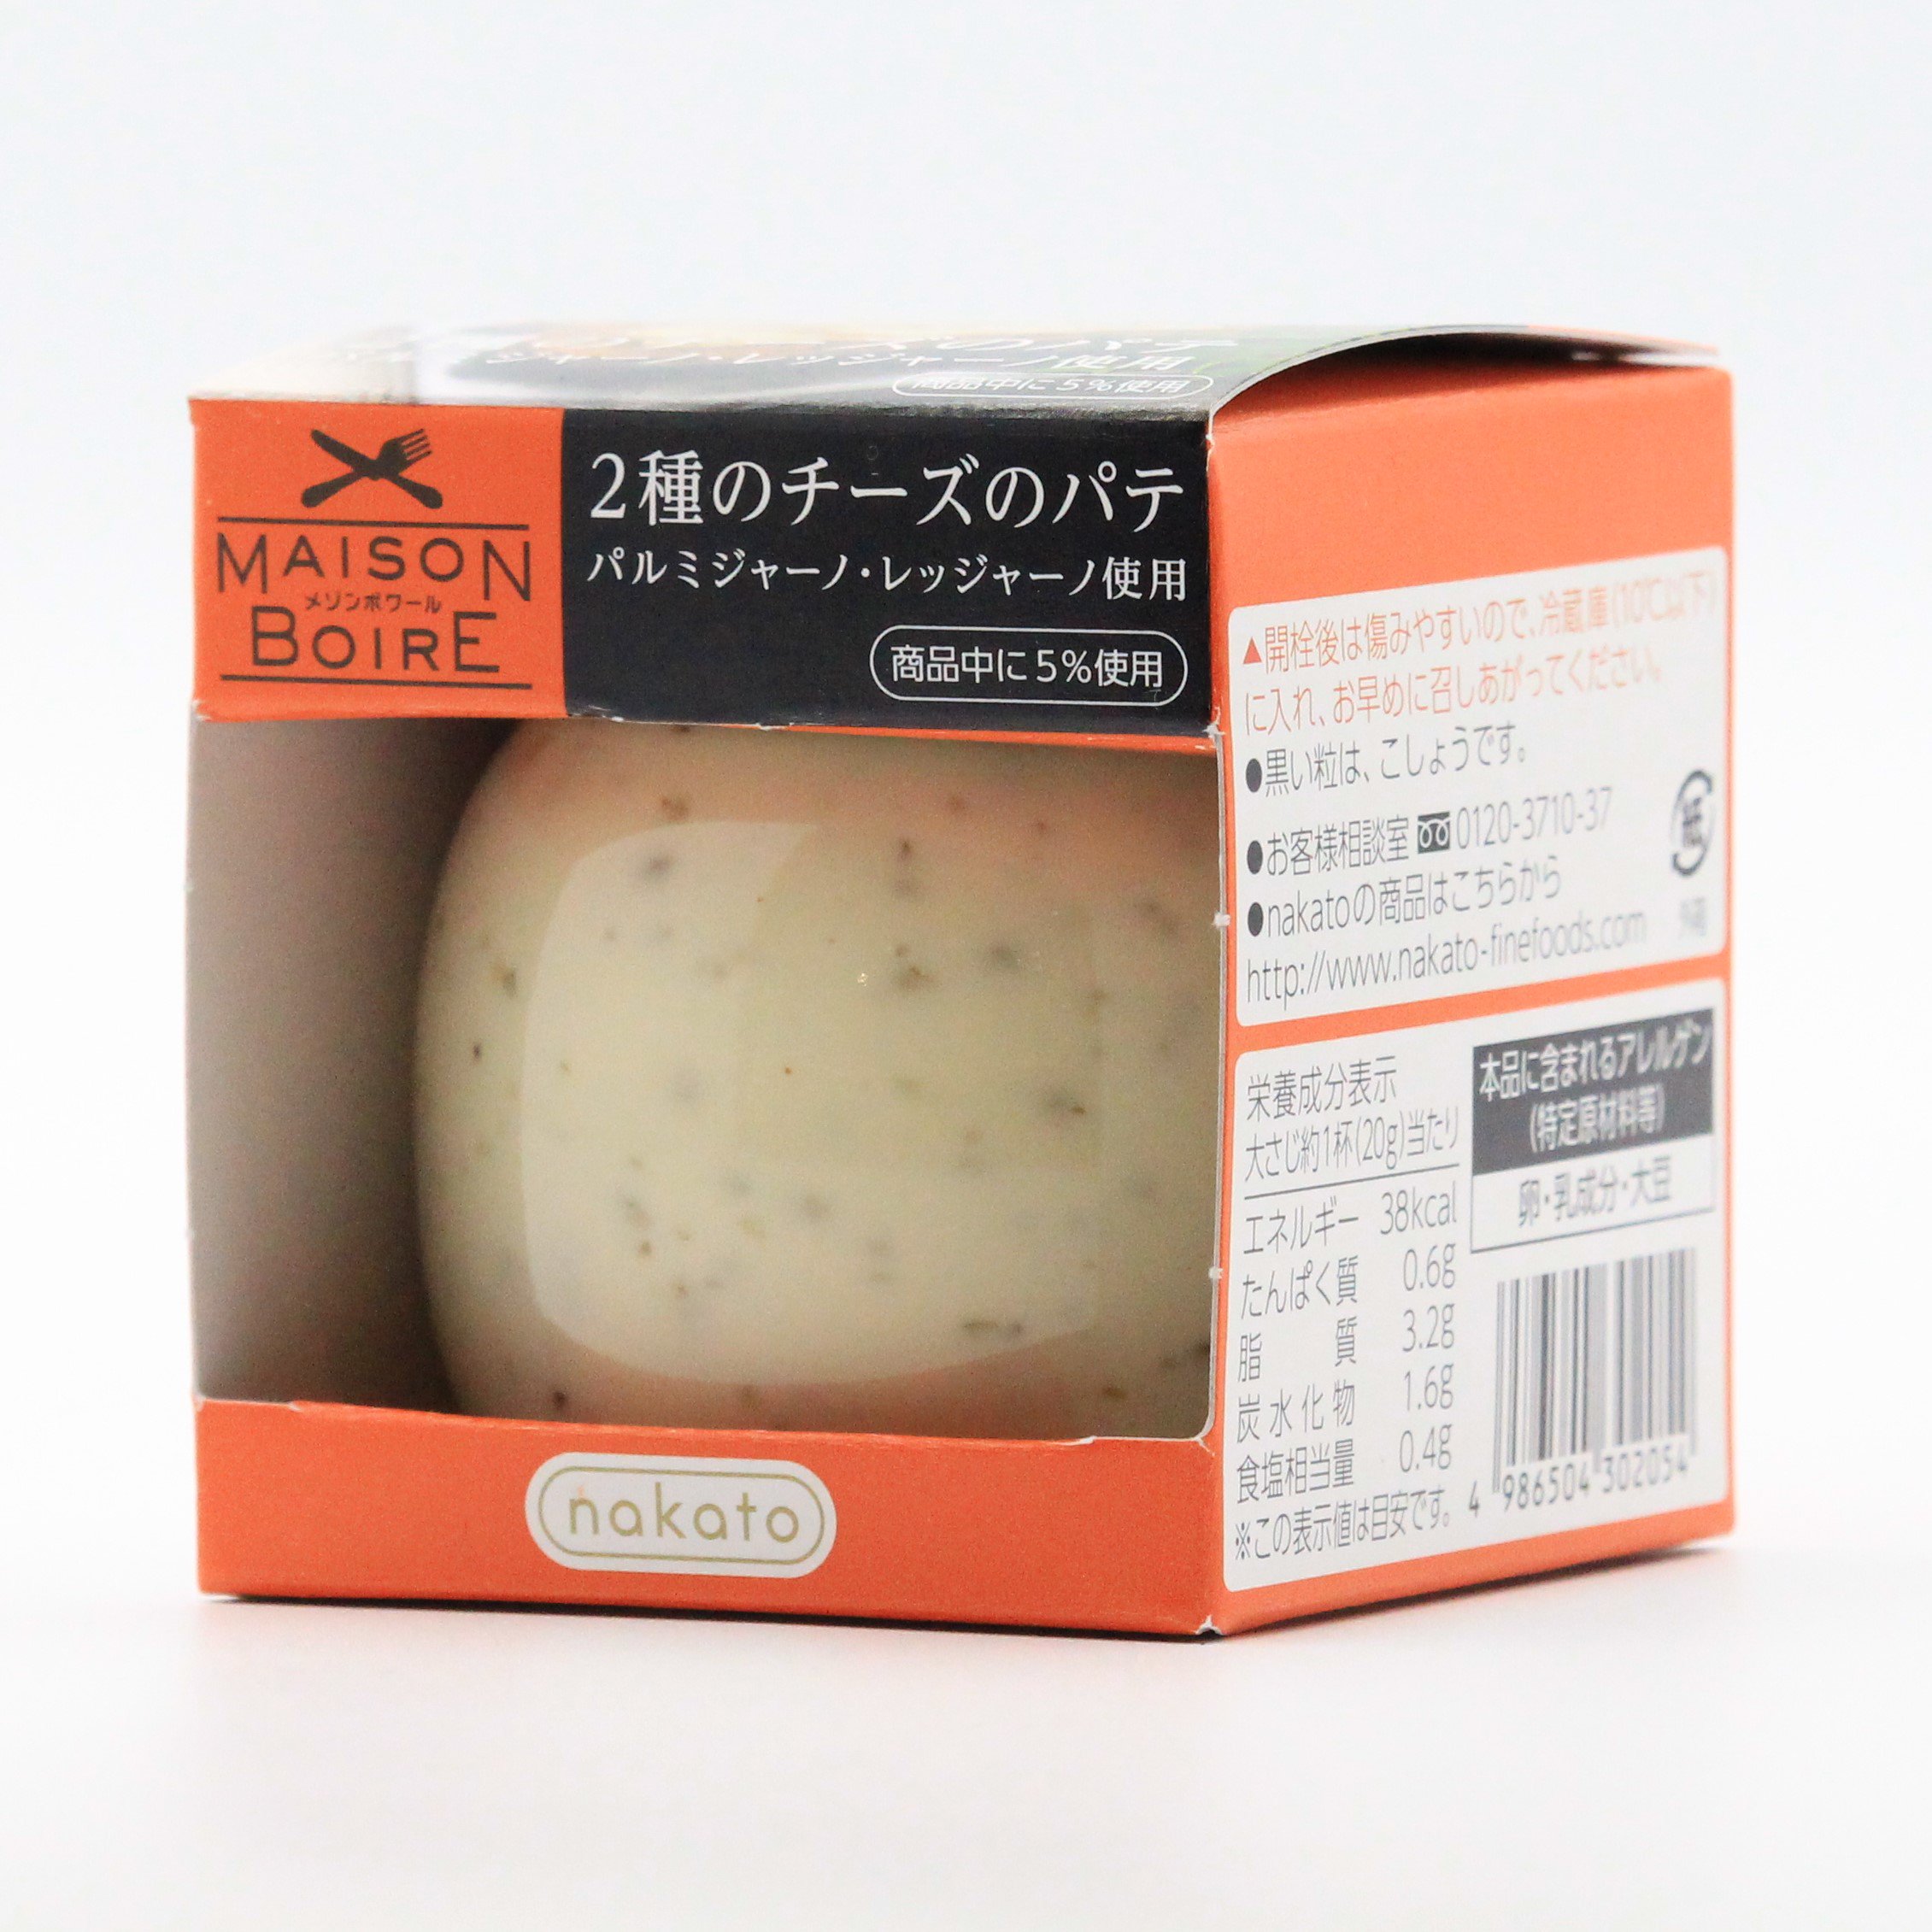 nakato／メゾンボワール ２種のチーズのパテ パルミジャーノ・レッジャーノ使用 95g